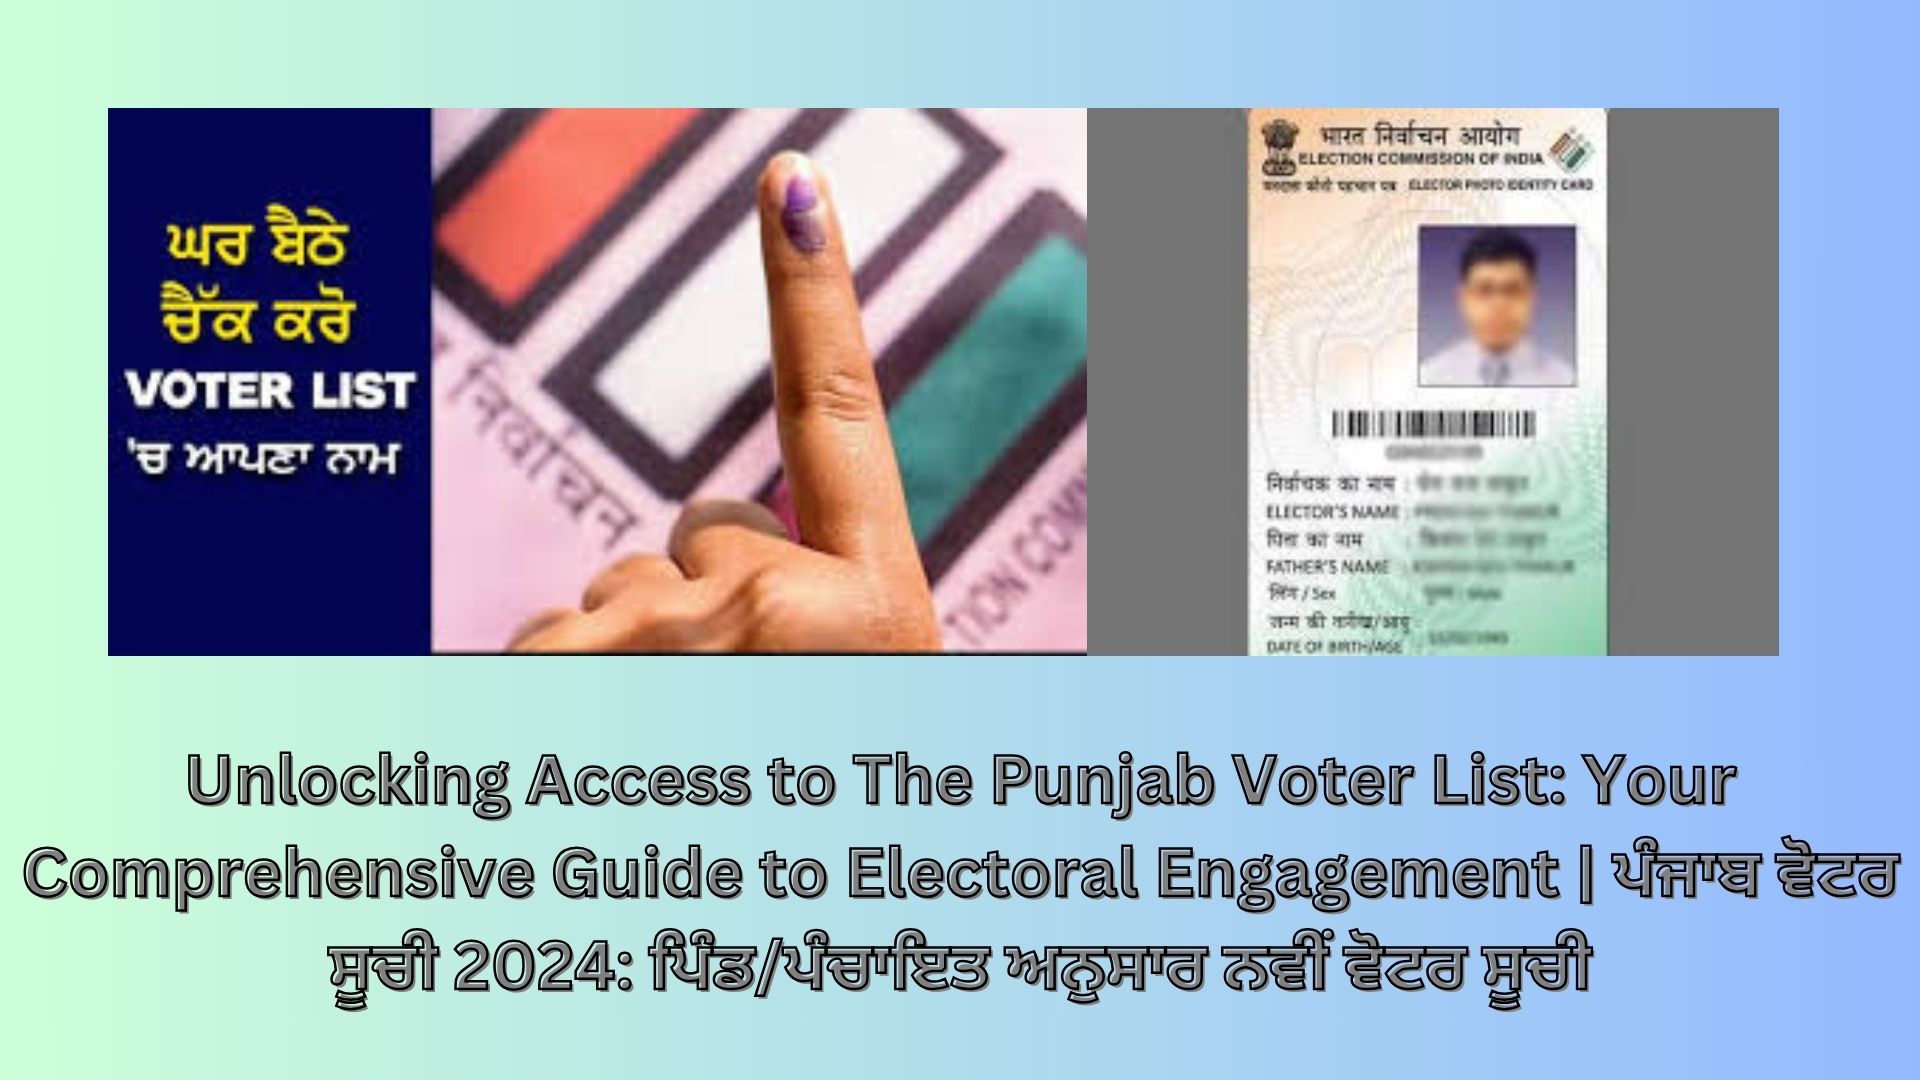 Unlocking Access to The Punjab Voter List: Your Comprehensive Guide to Electoral Engagement | ਪੰਜਾਬ ਵੋਟਰ ਸੂਚੀ 2024: ਪਿੰਡ/ਪੰਚਾਇਤ ਅਨੁਸਾਰ ਨਵੀਂ ਵੋਟਰ ਸੂਚੀ